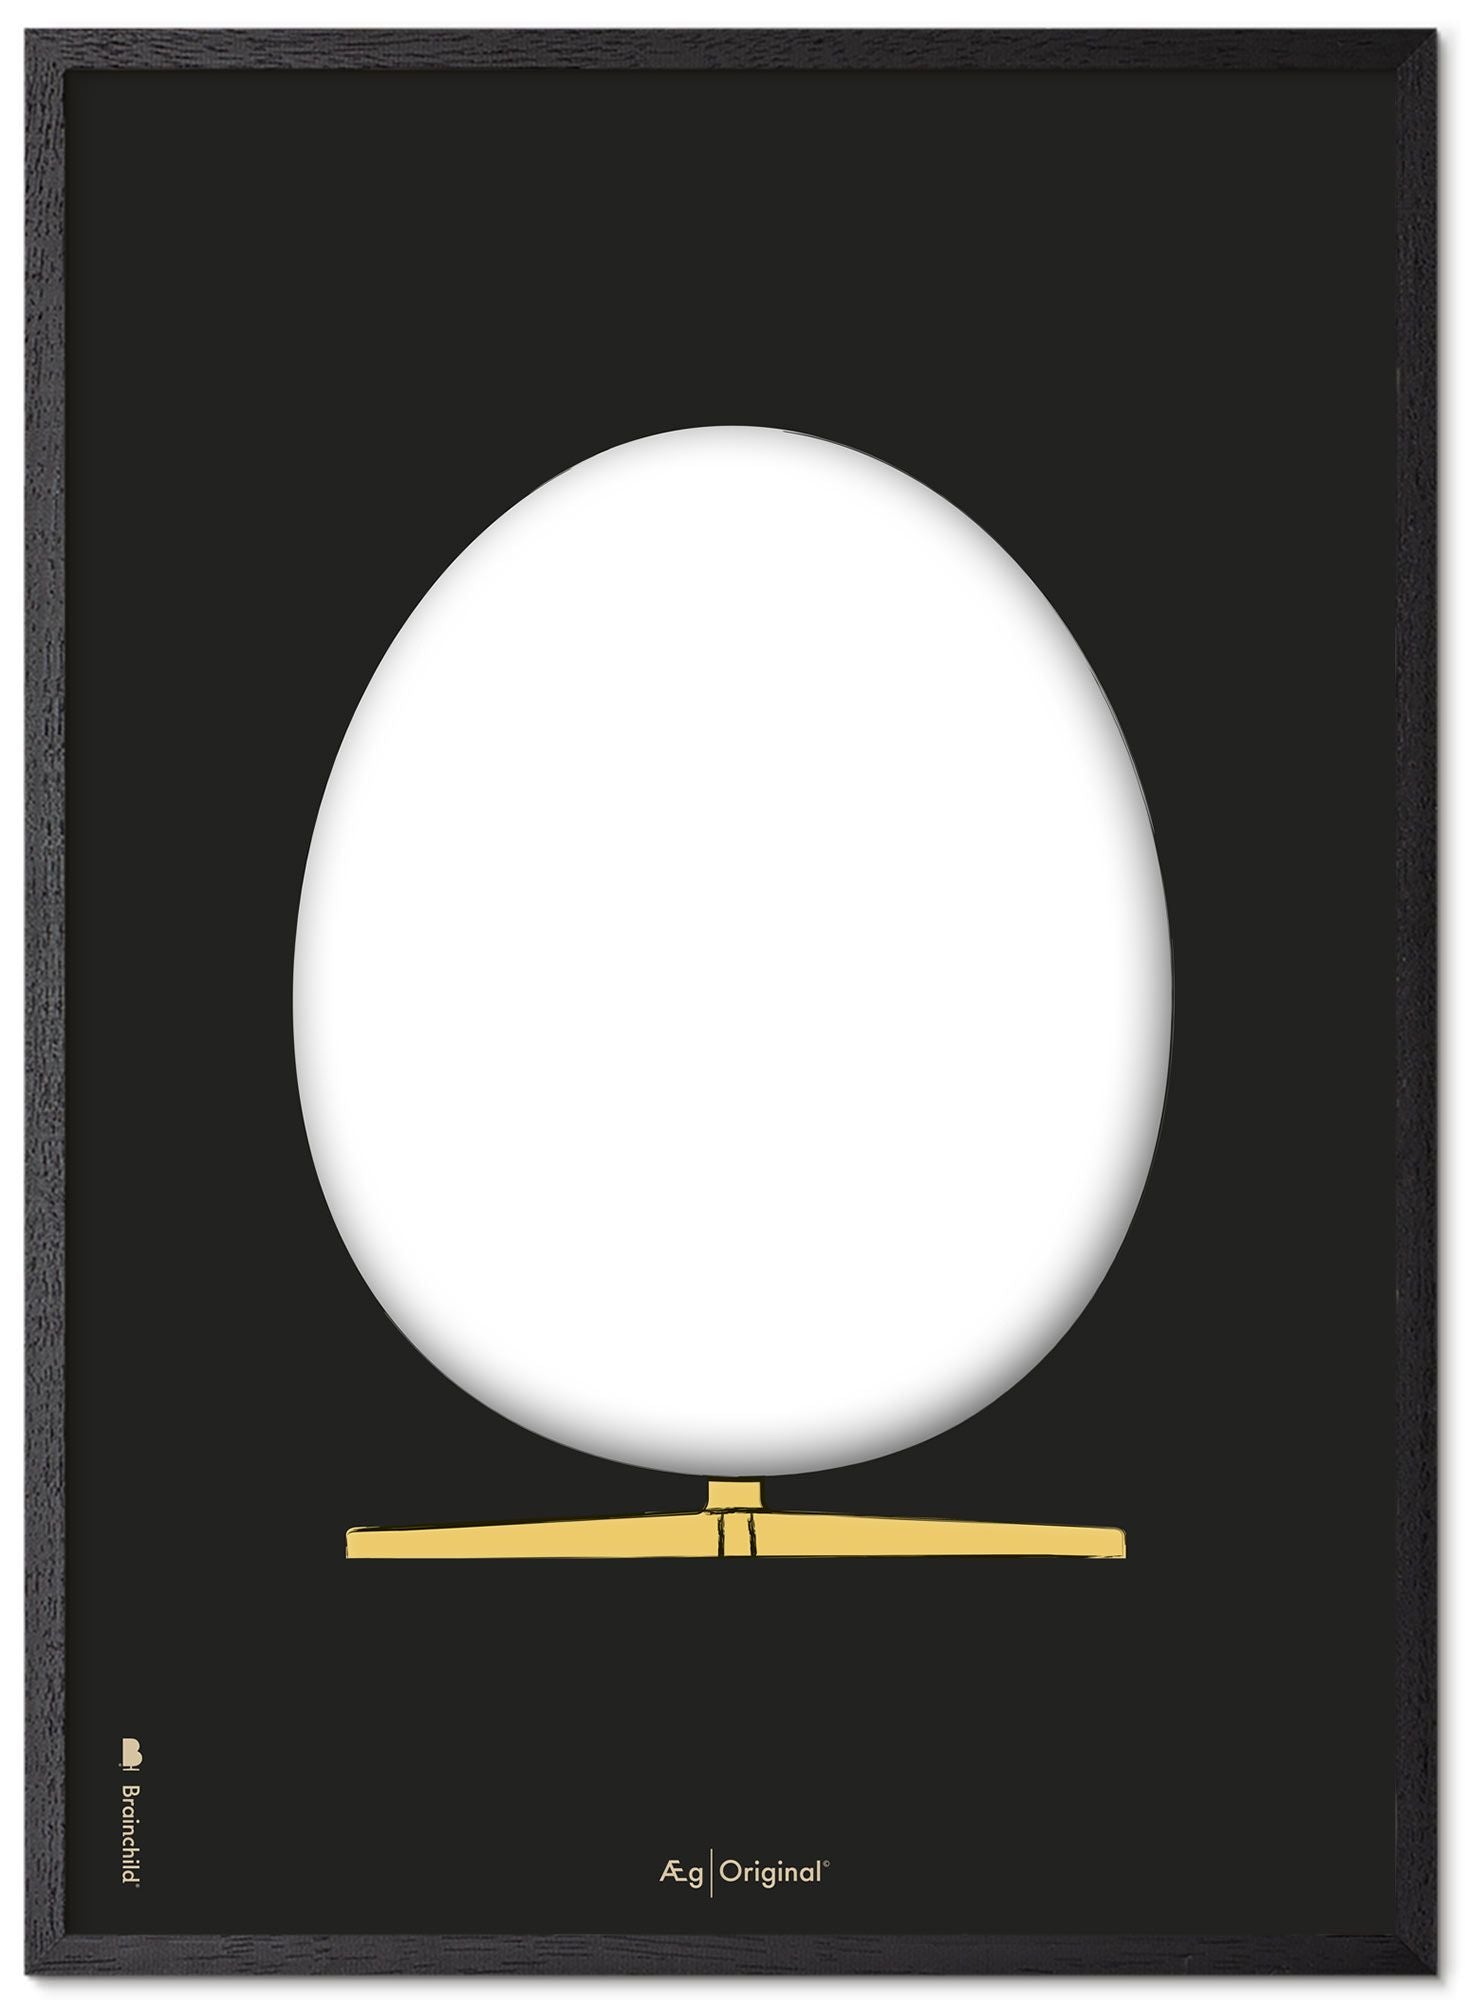 Brainchild The Egg Design Sketch Poster Frame Made Of Black Lacquered Wood A5, Black Background